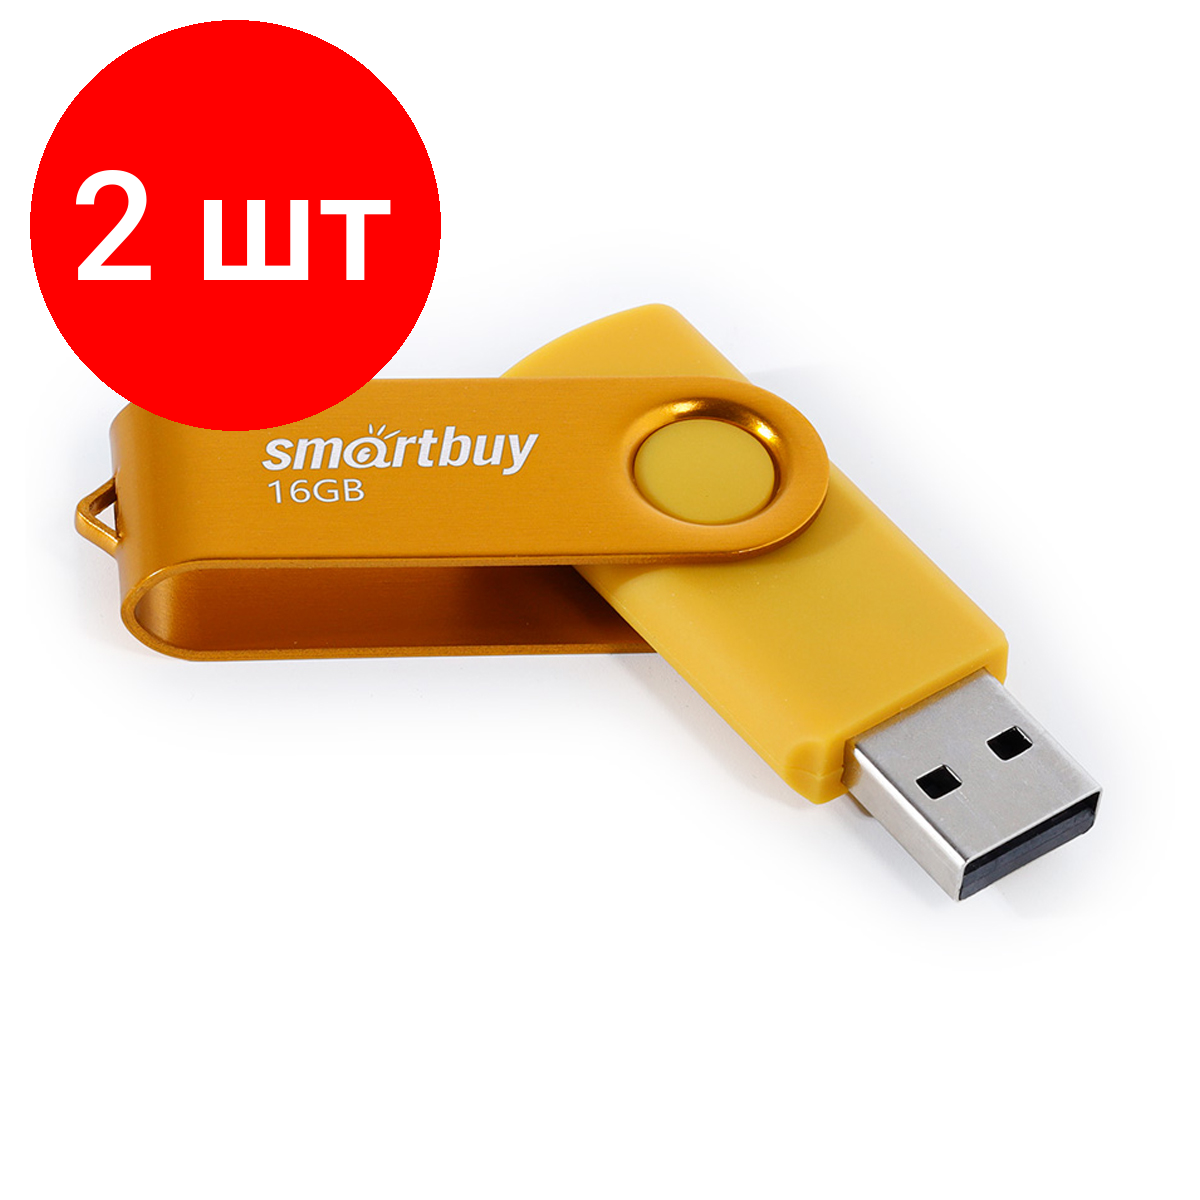 Комплект 2 шт, Память Smart Buy "Twist" 16GB, USB 2.0 Flash Drive, желтый